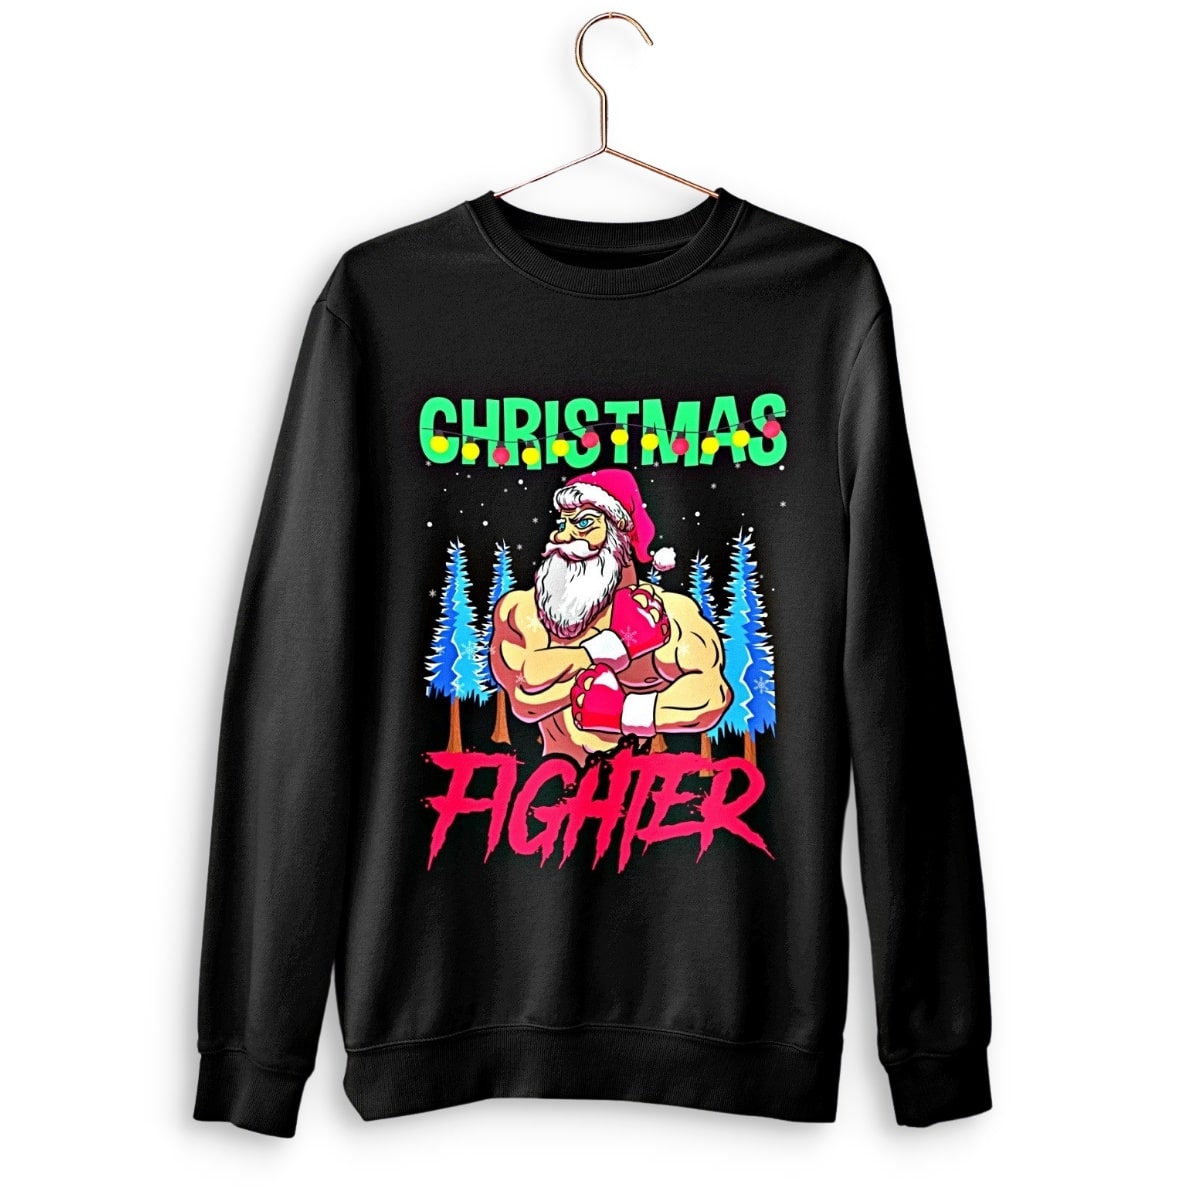 Christmas FIGHTER! Heavy Blend Christmas Sweater, Black - Santaland